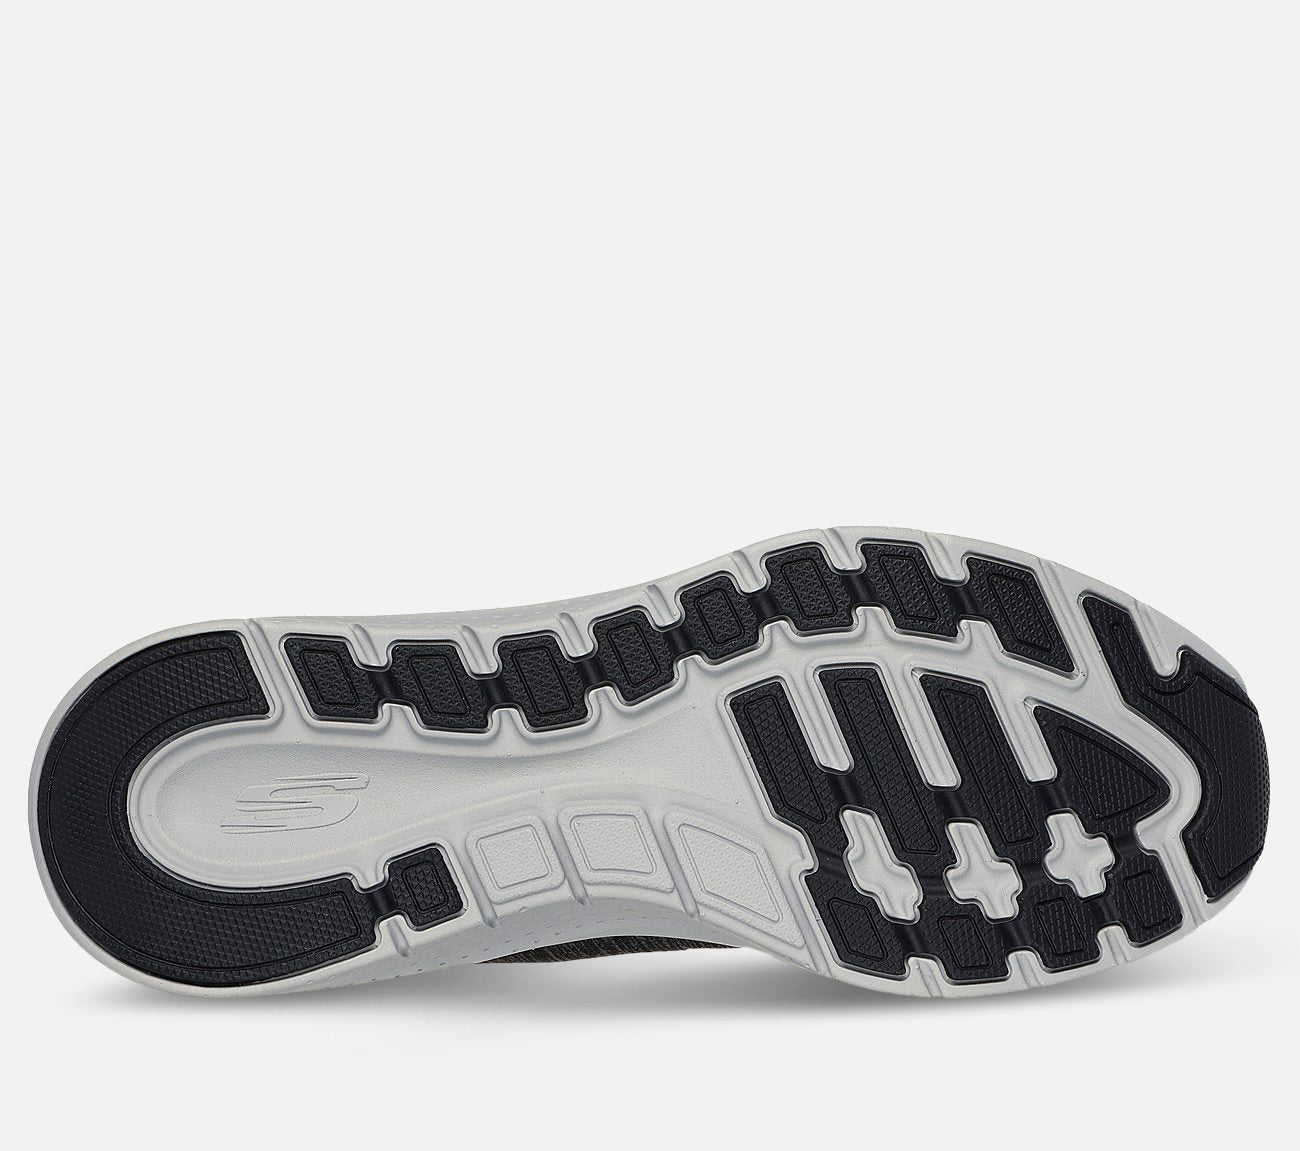 Arch Fit 2.0 - Upperhand Shoe Skechers